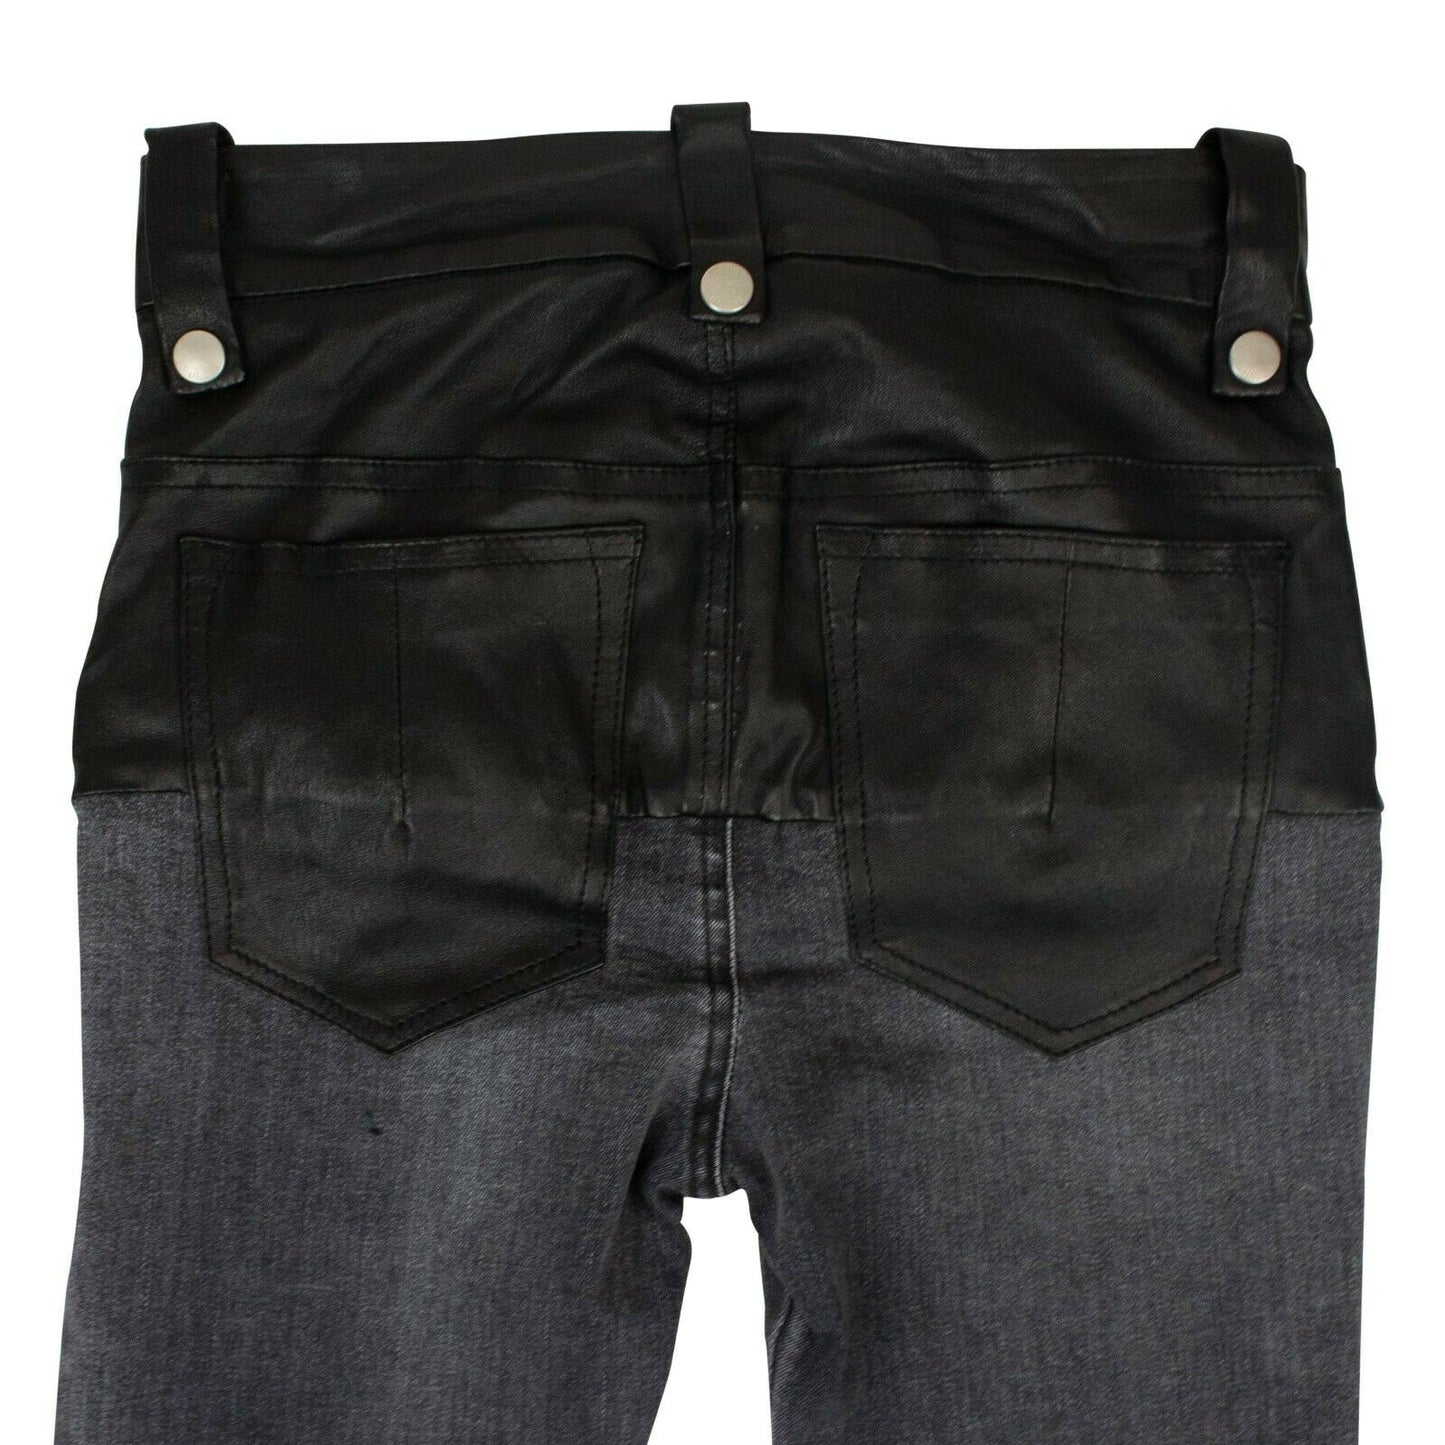 Unravel Project Stonewash Lace Up Skinny Jean Pants - Black